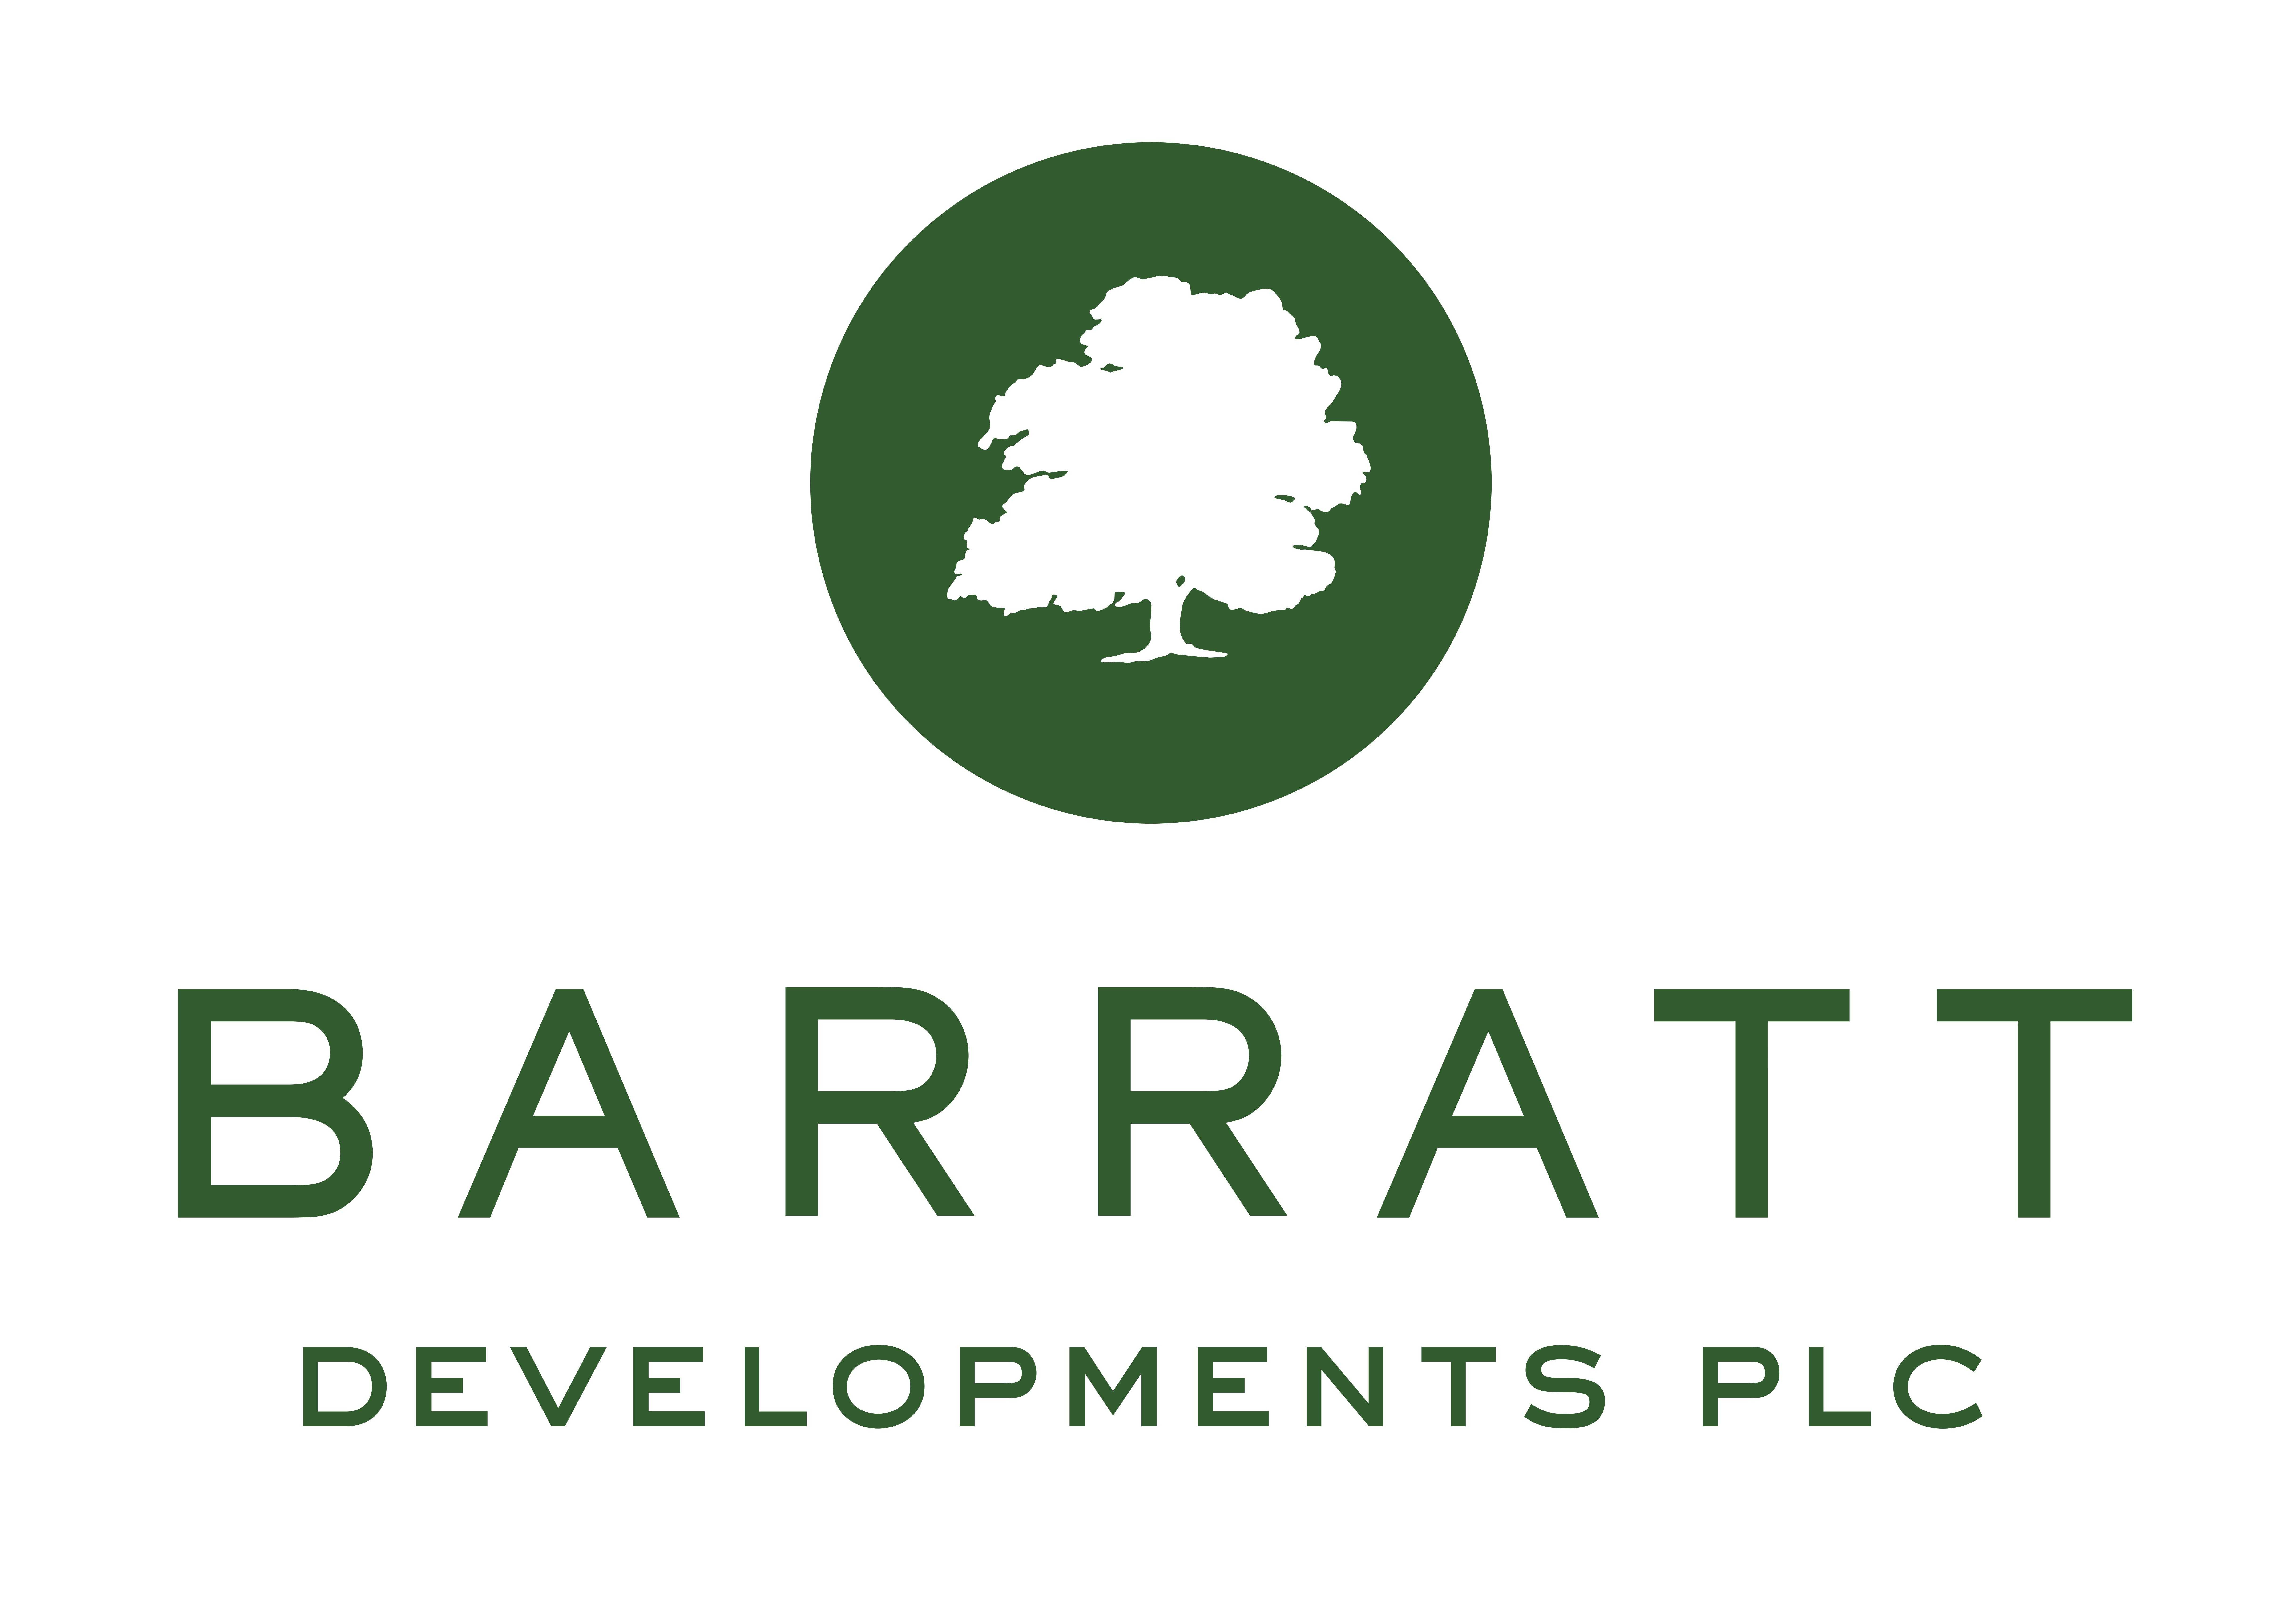 Barratt Homes - Armed Forces Transition Programme